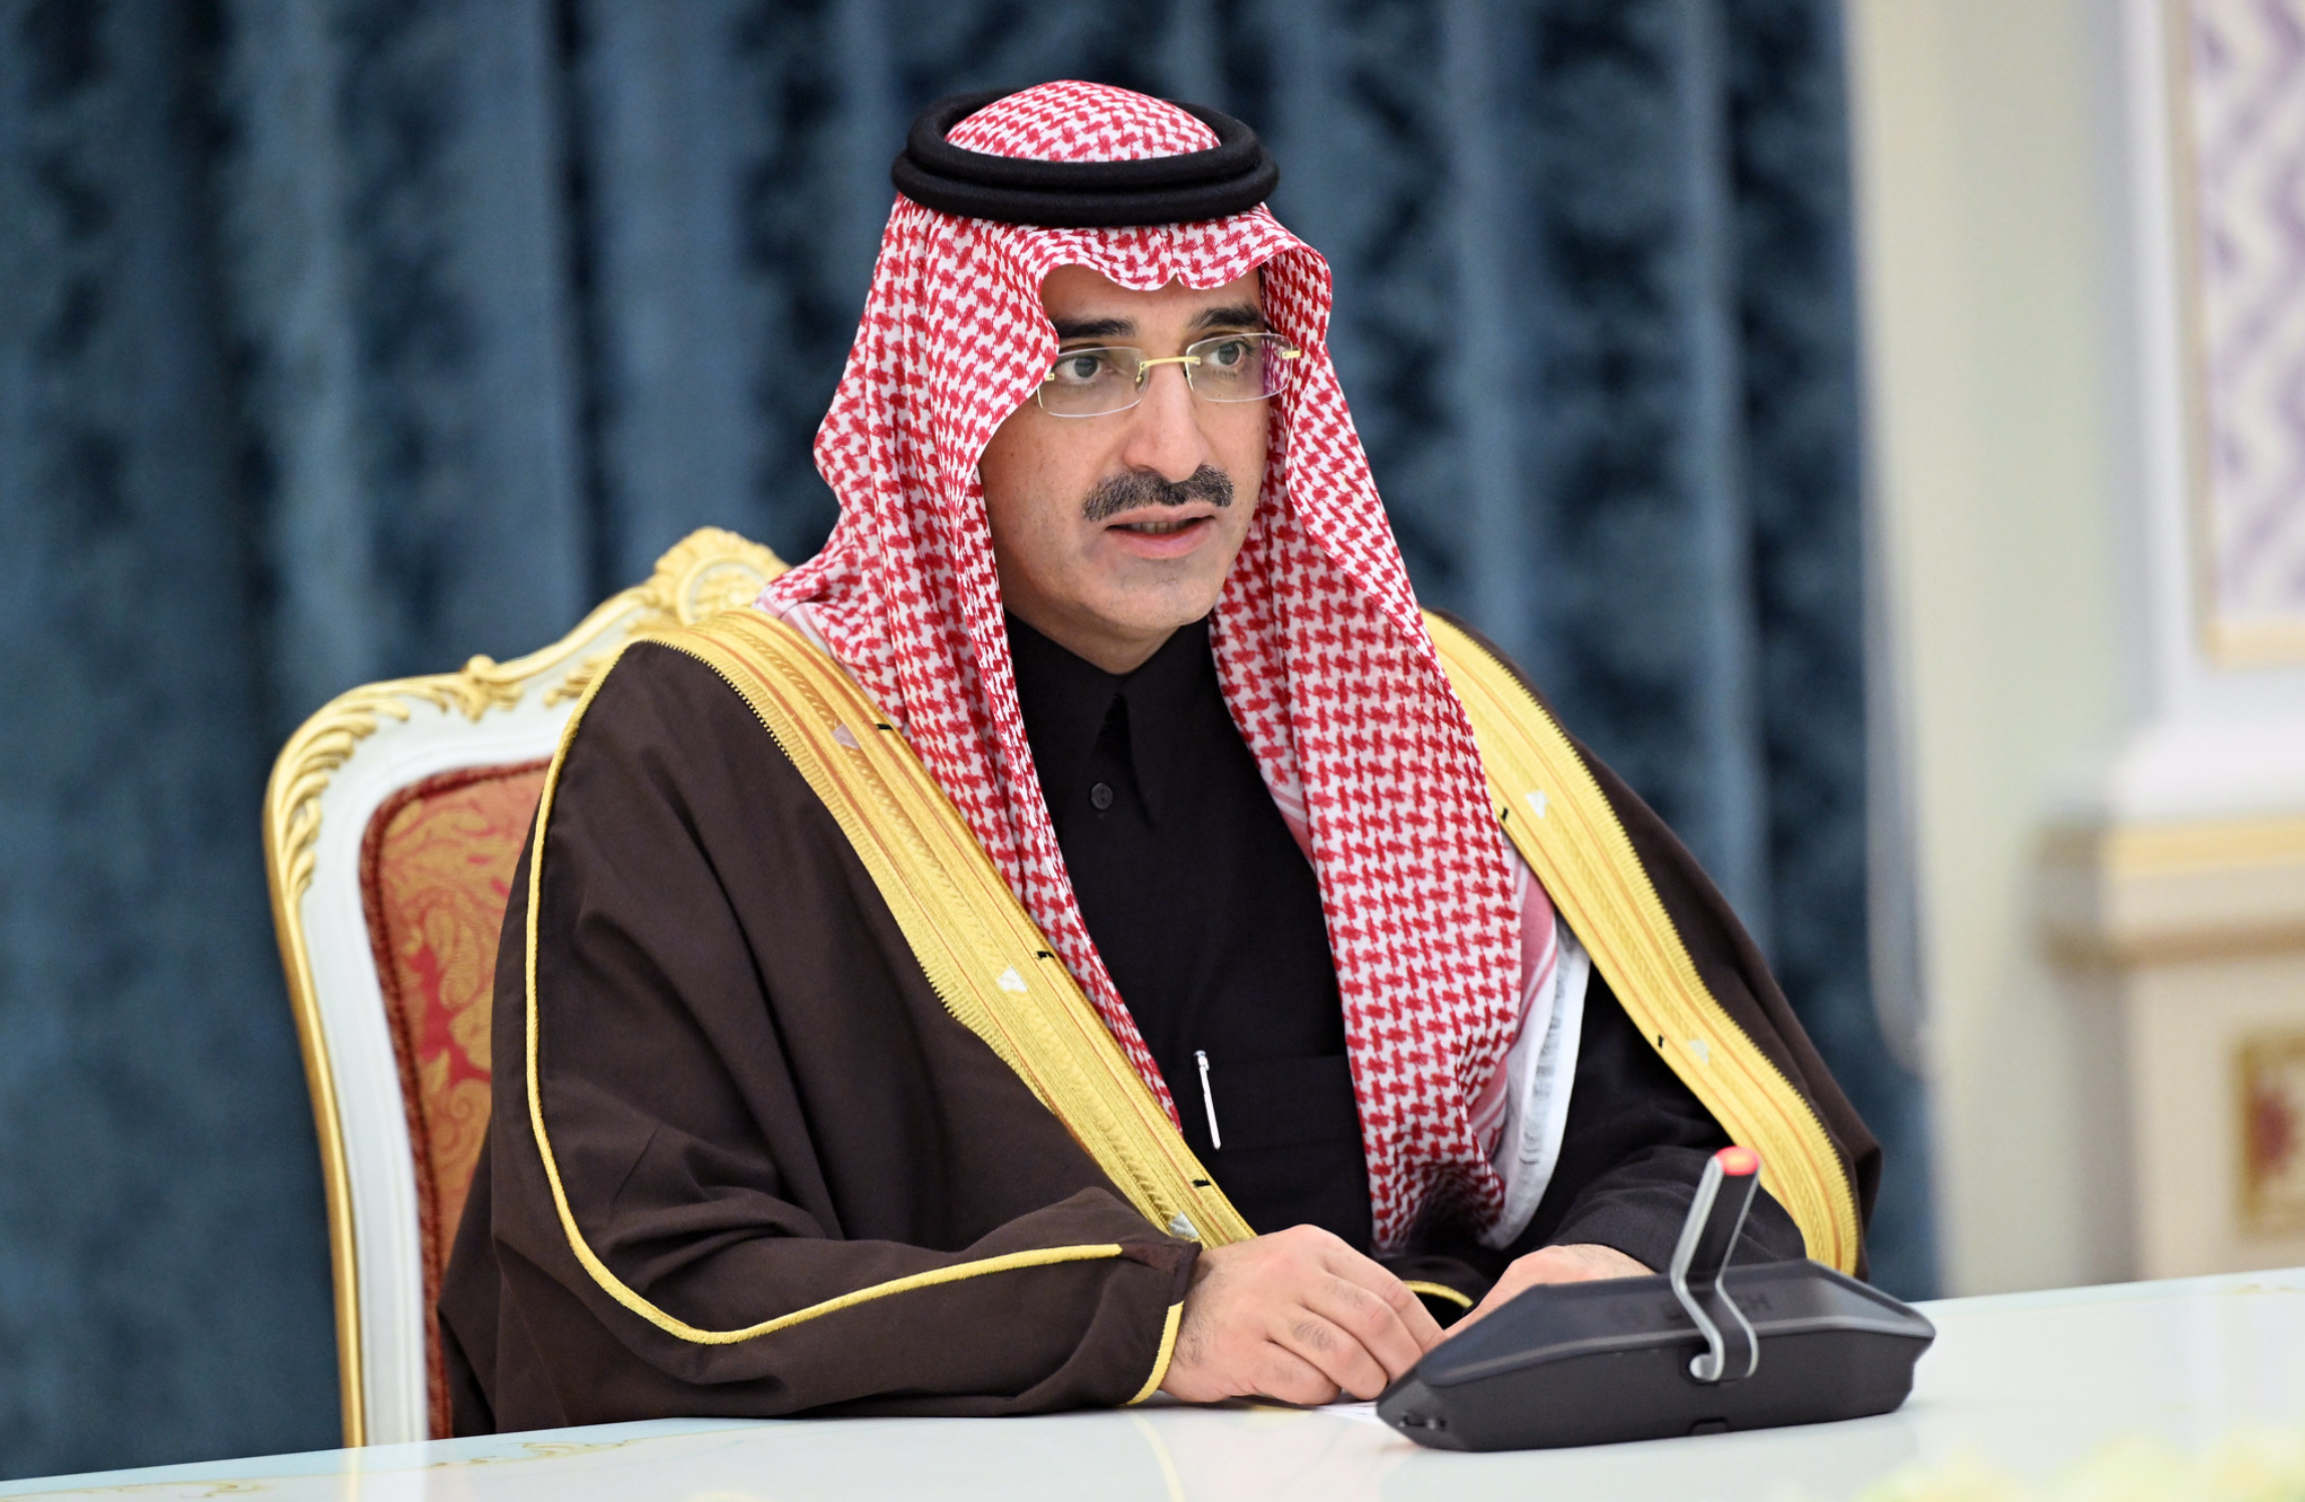 Sultan Abdulrahman Al-Marshad, the Chief Executive Officer of the Saudi Fund for Development